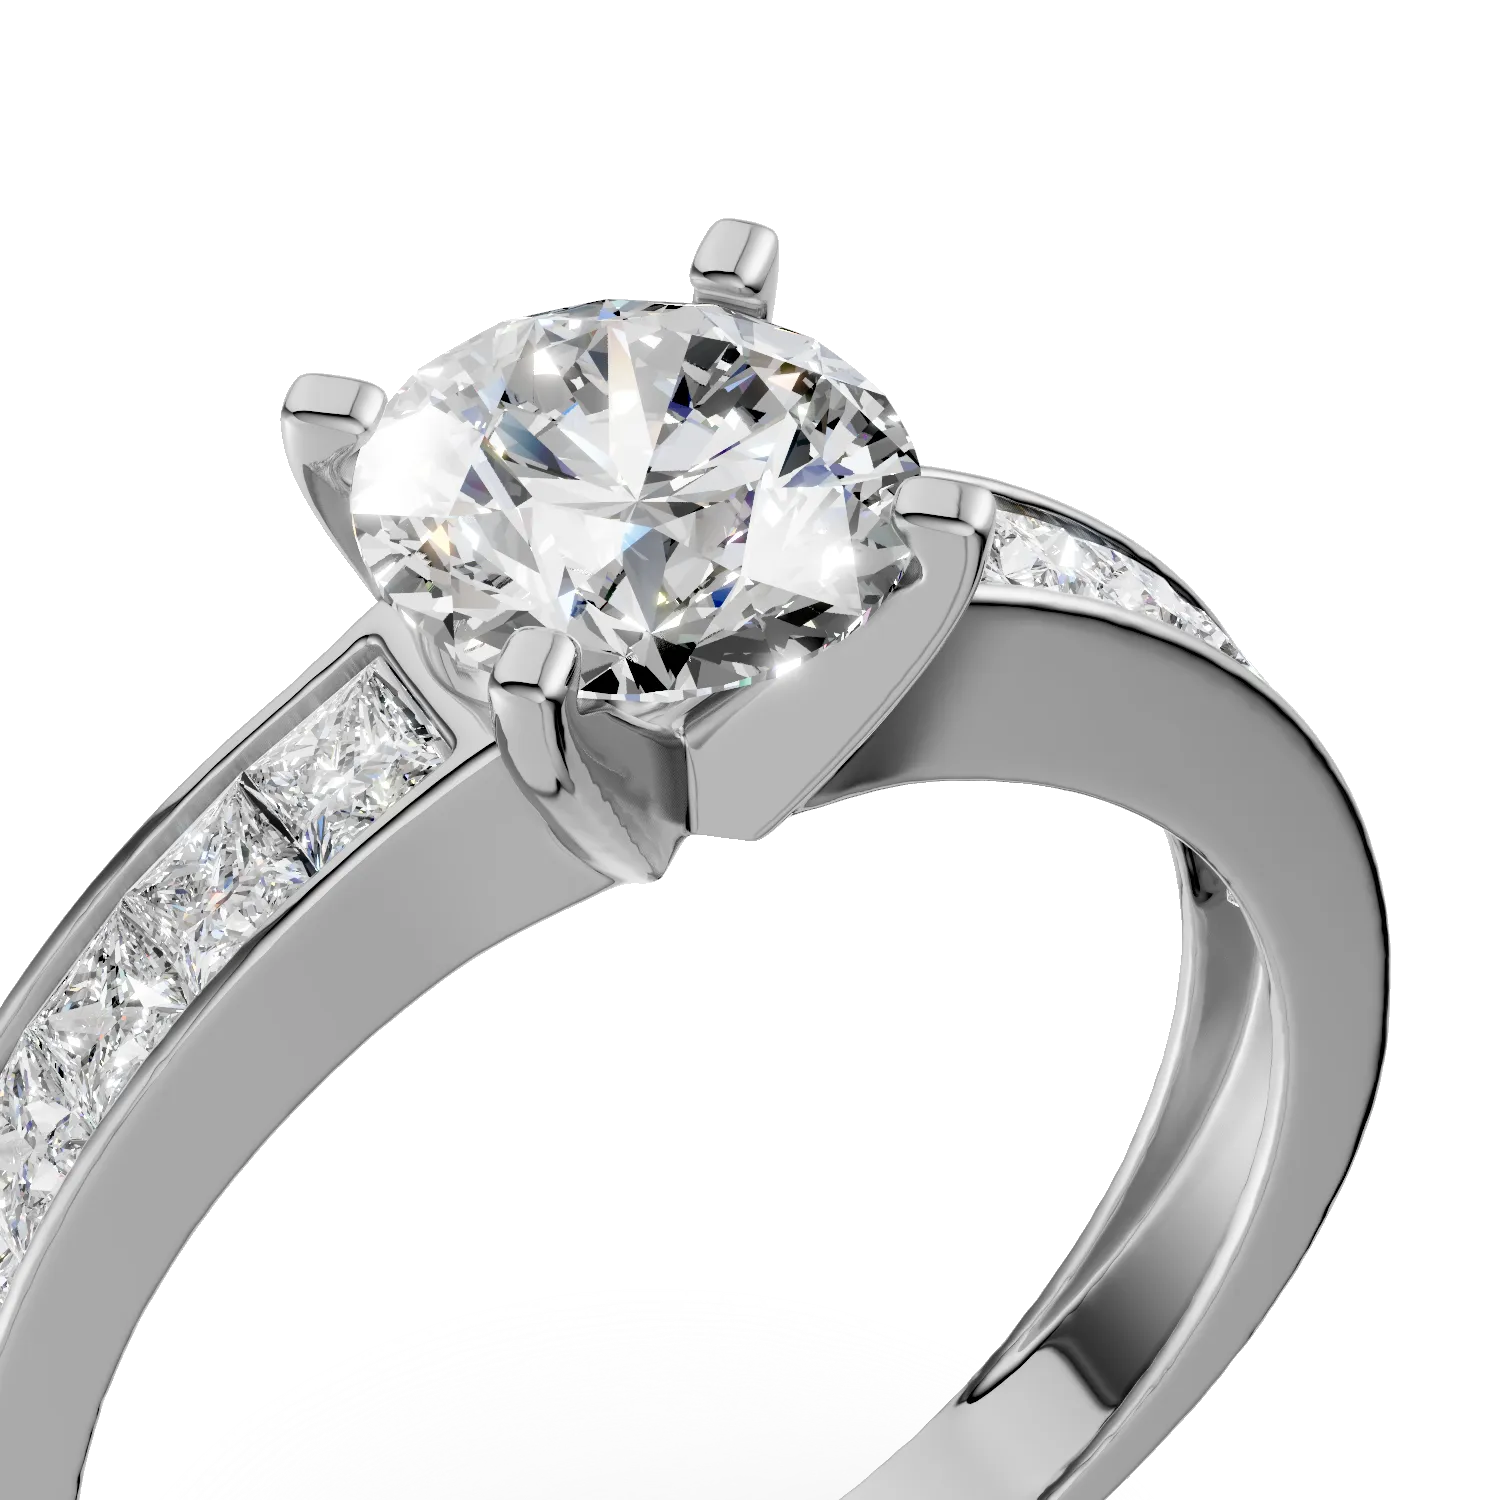 White gold engagement ring